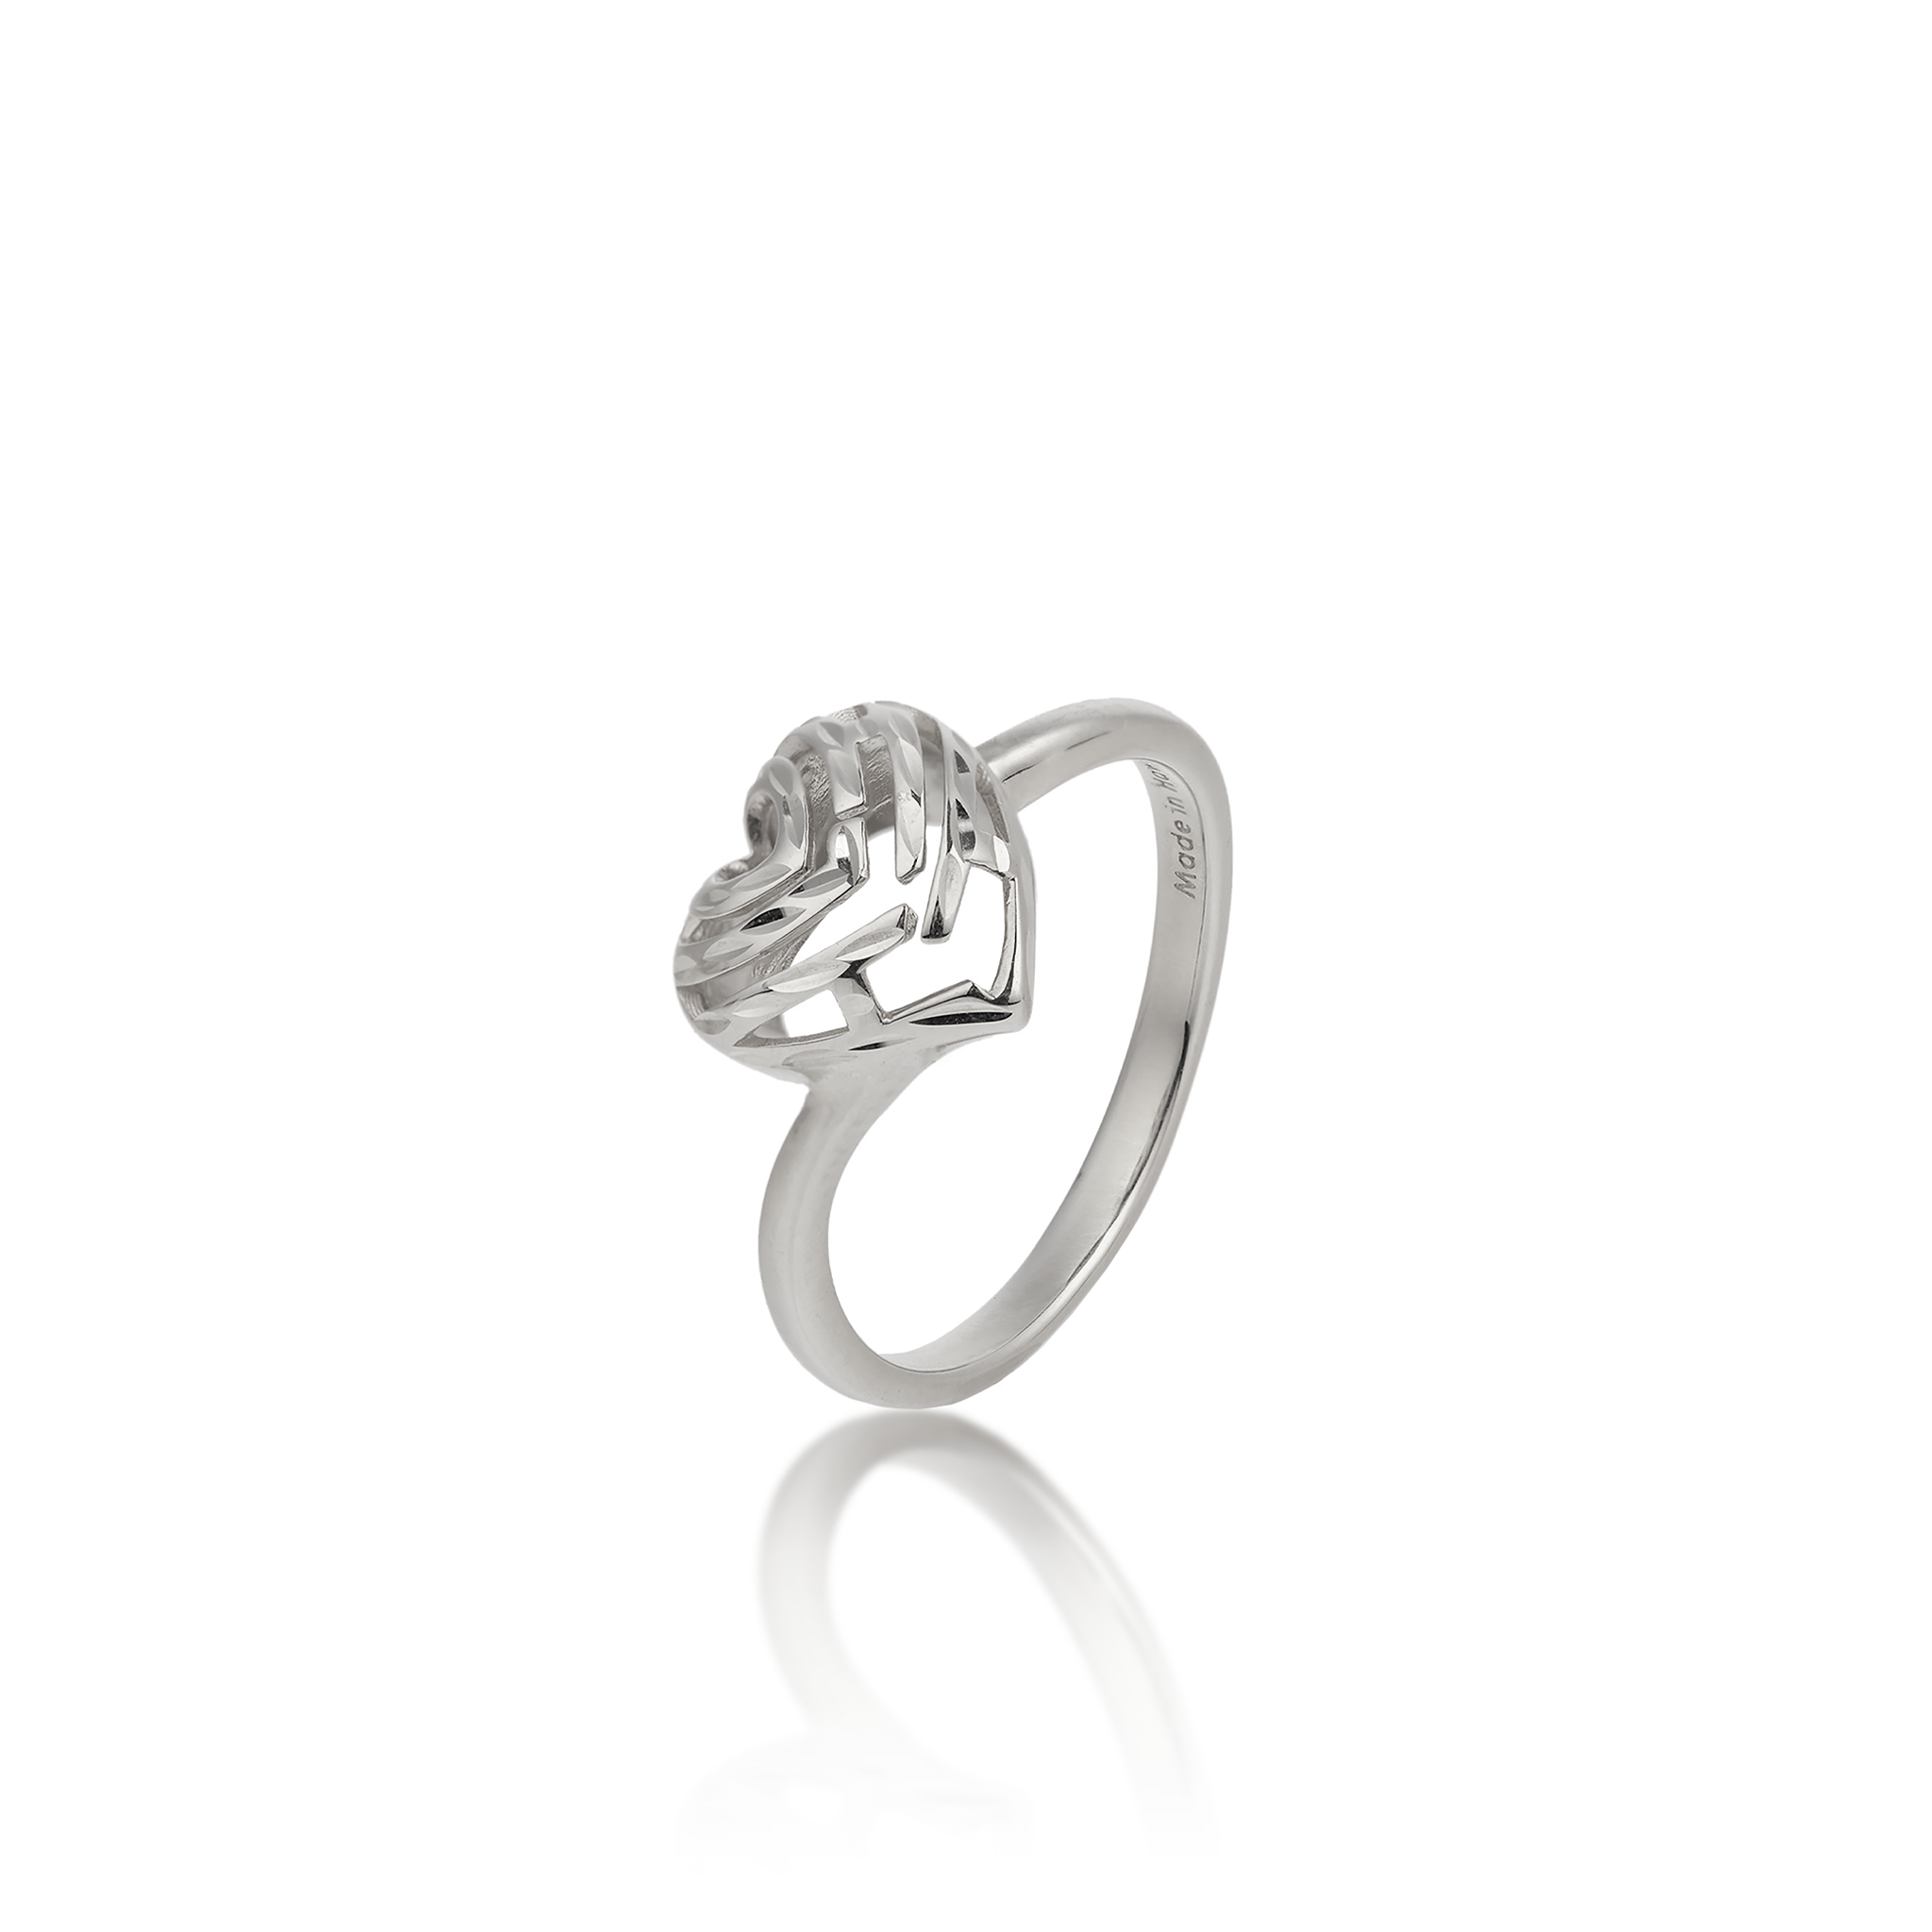 Aloha Heart Ring in White Gold - 11mm